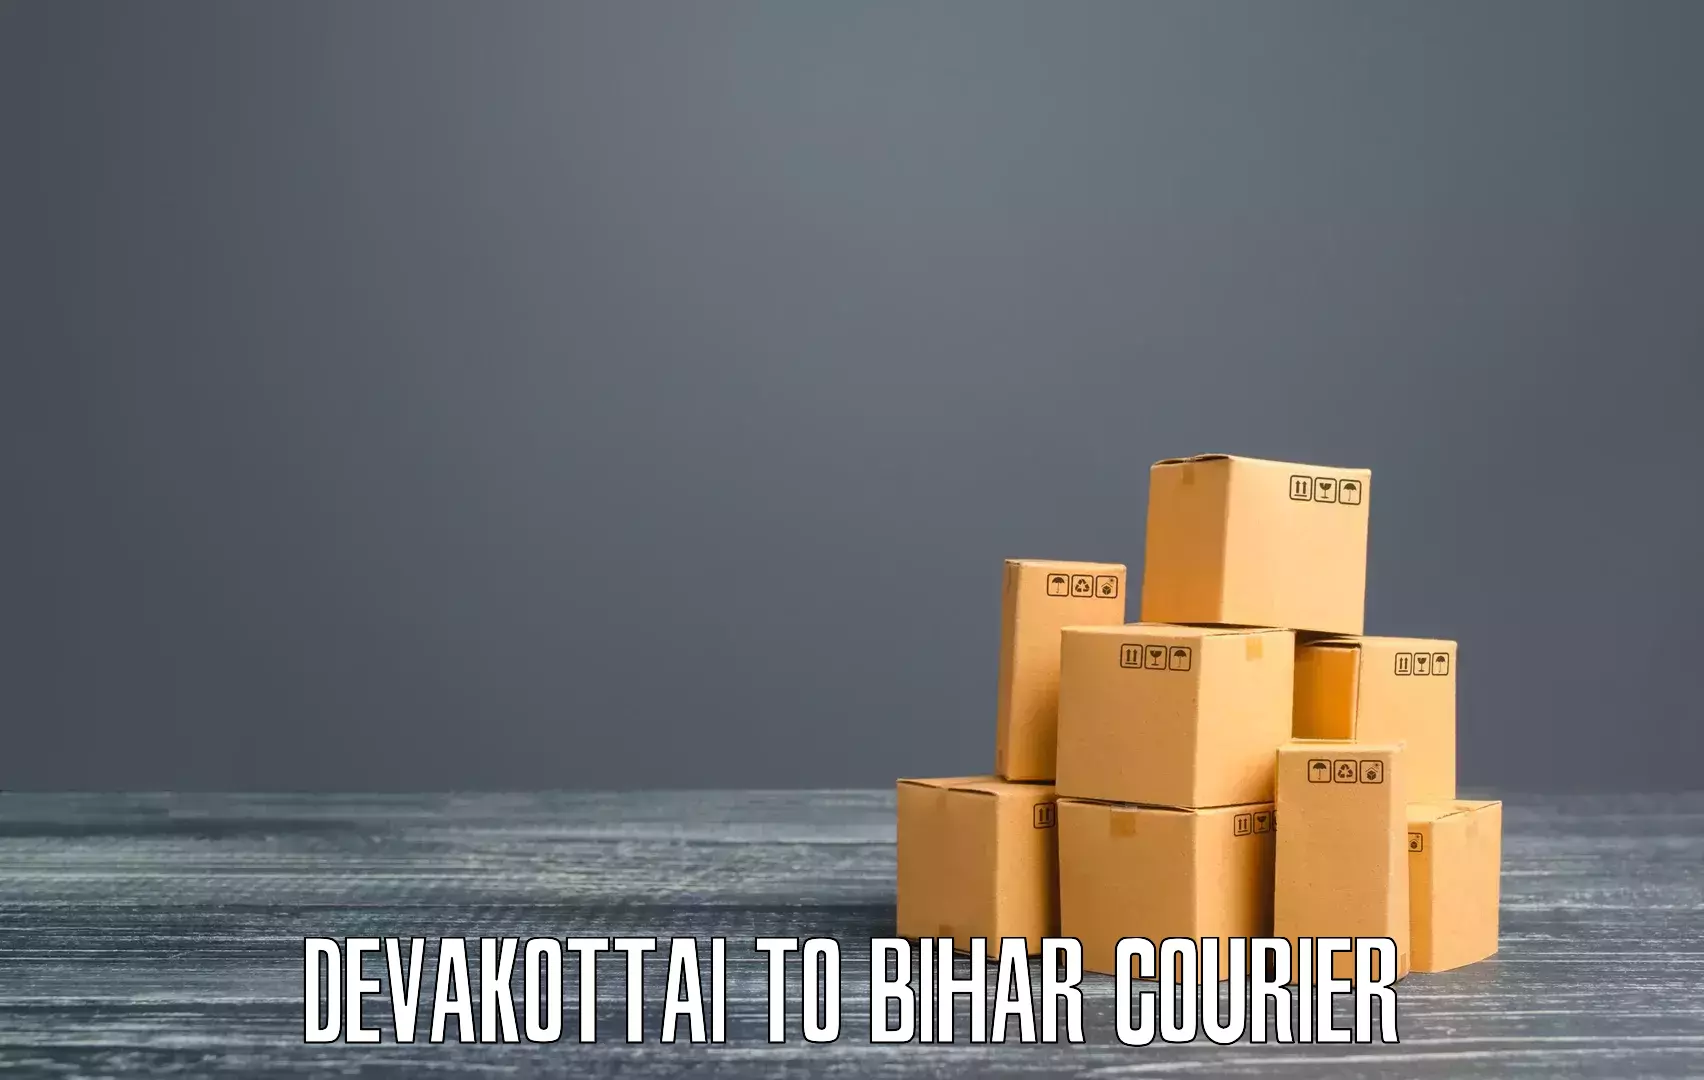 Courier service innovation Devakottai to Bankipore